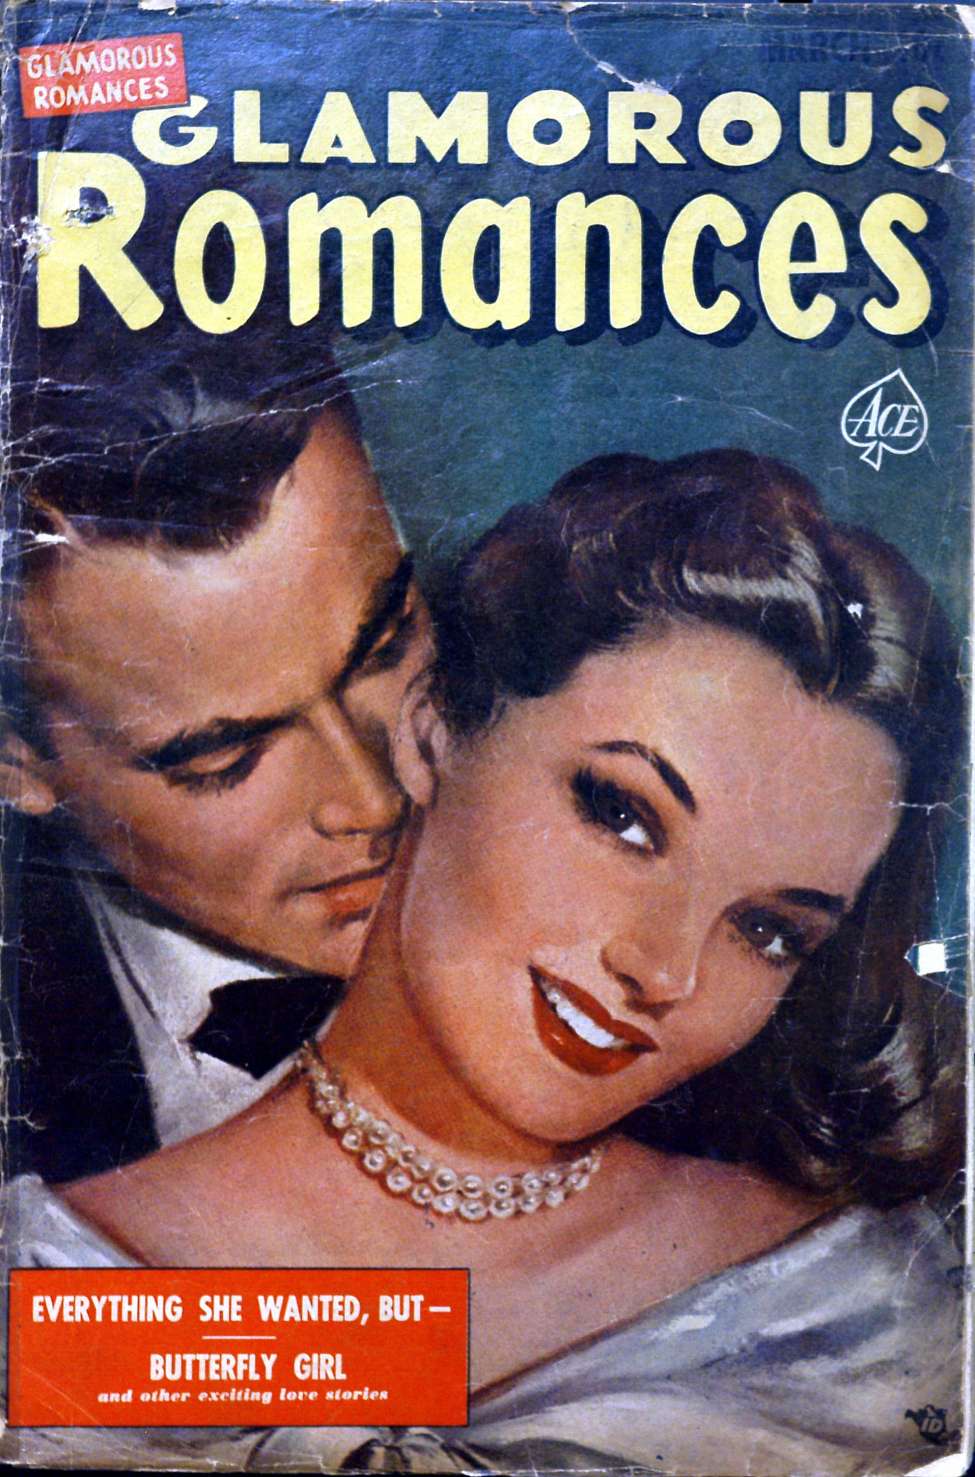 Glamorous Romances 59 (Ace Magazines) - Comic Book Plus